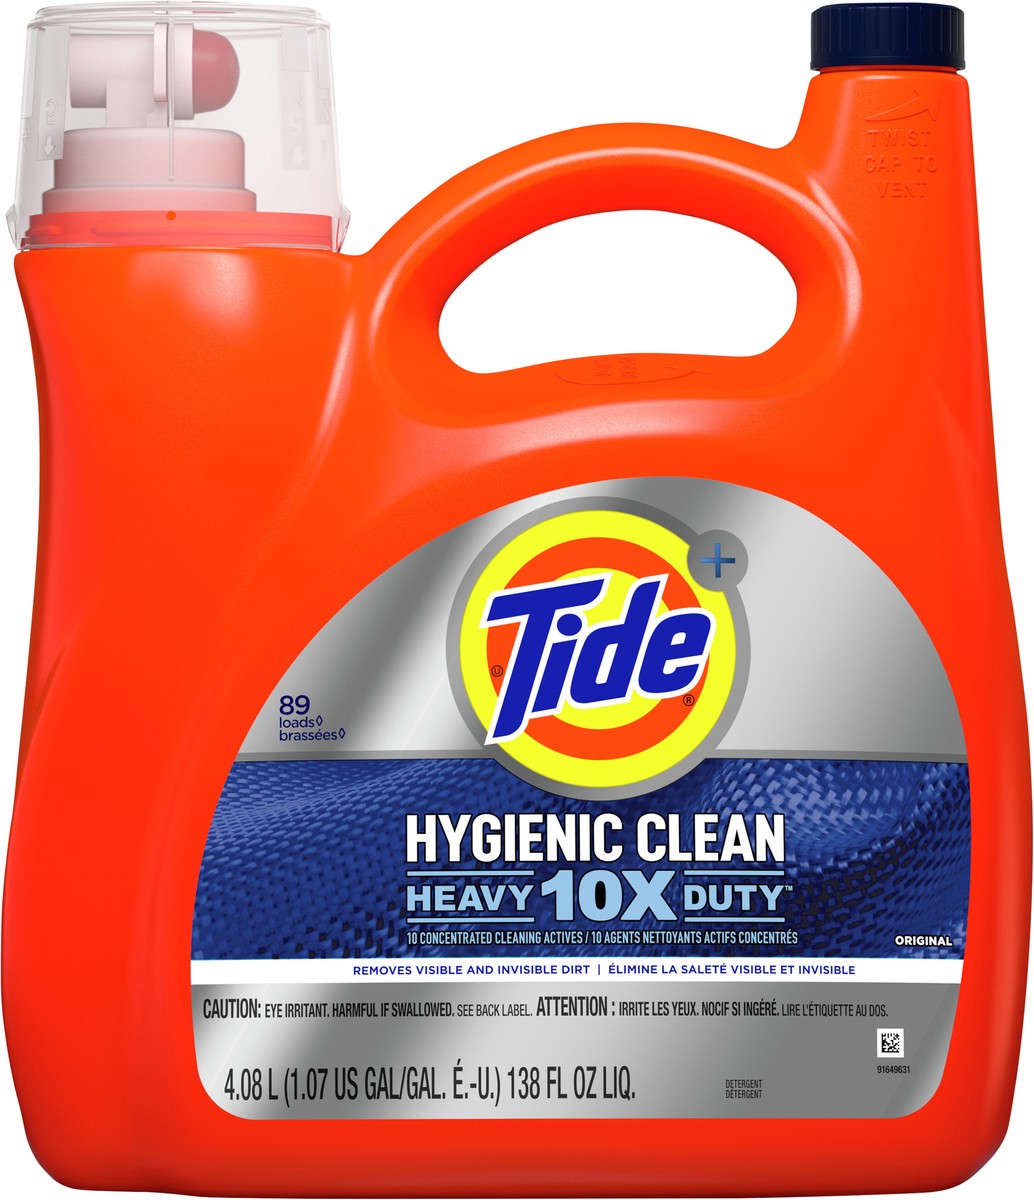 slide 5 of 6, Tide + Heavy 10X Duty Hygienic Clean Original Detergent 4.08 lt, 4.08 l